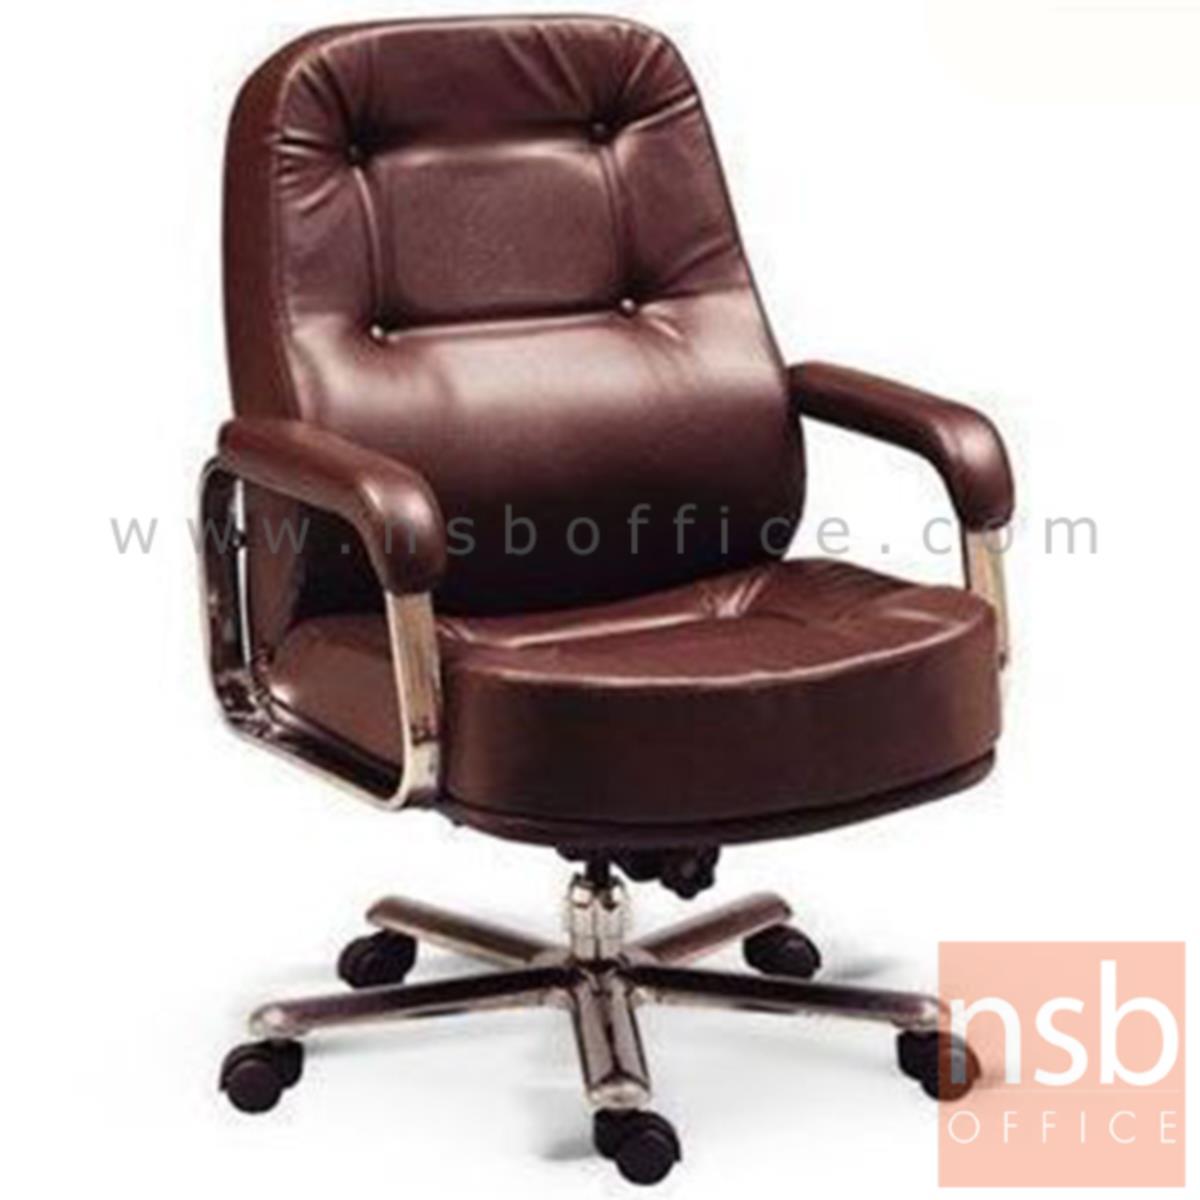 B03A466:เก้าอี้สำนักงาน รุ่น Ferdinand (เฟอร์ดินันด์)  ขาอลูมิเนียม